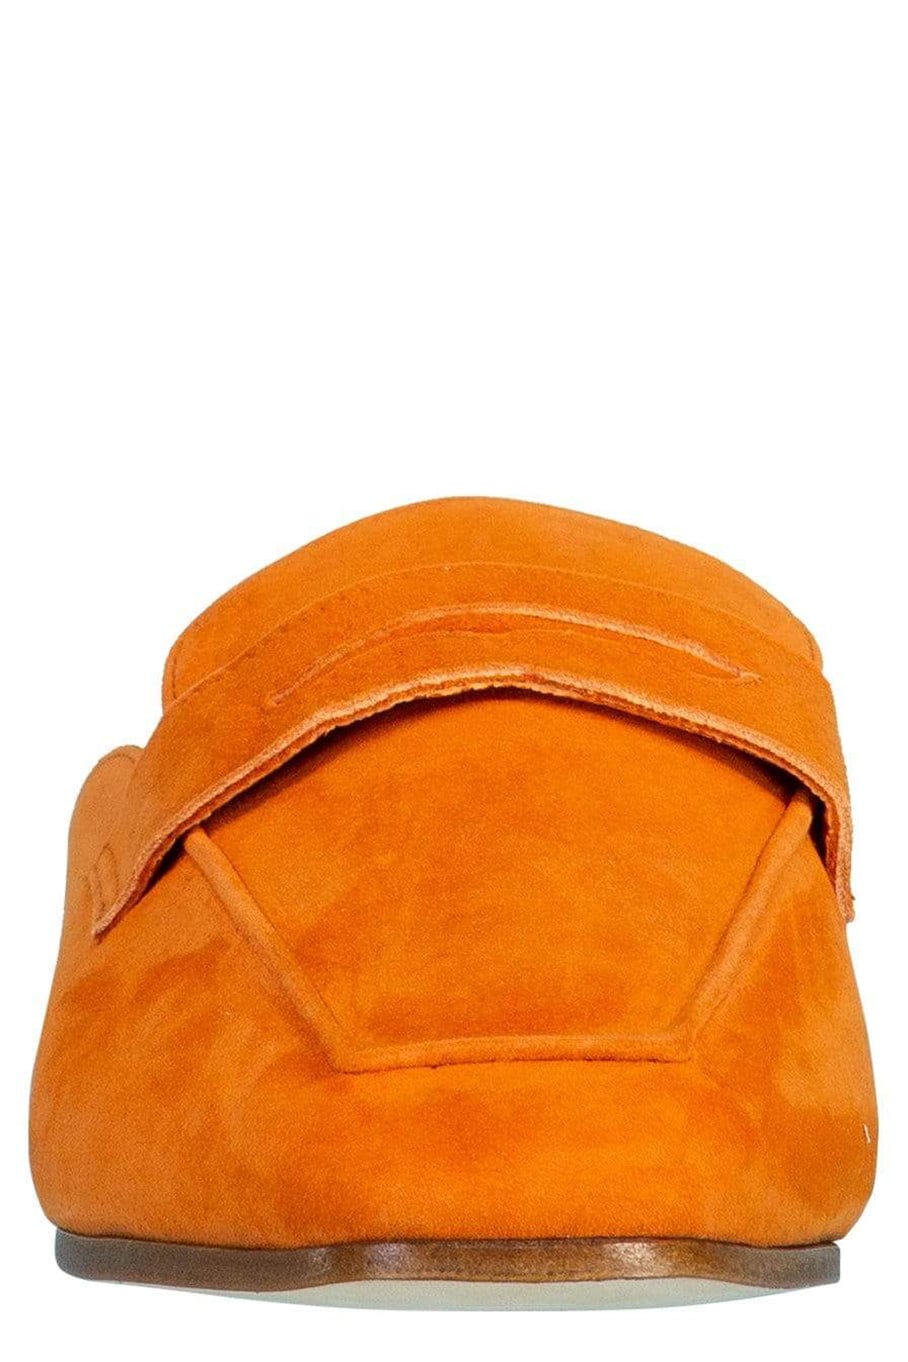 SOPHIQUE-Orange Riviera Suede Leather Mule-